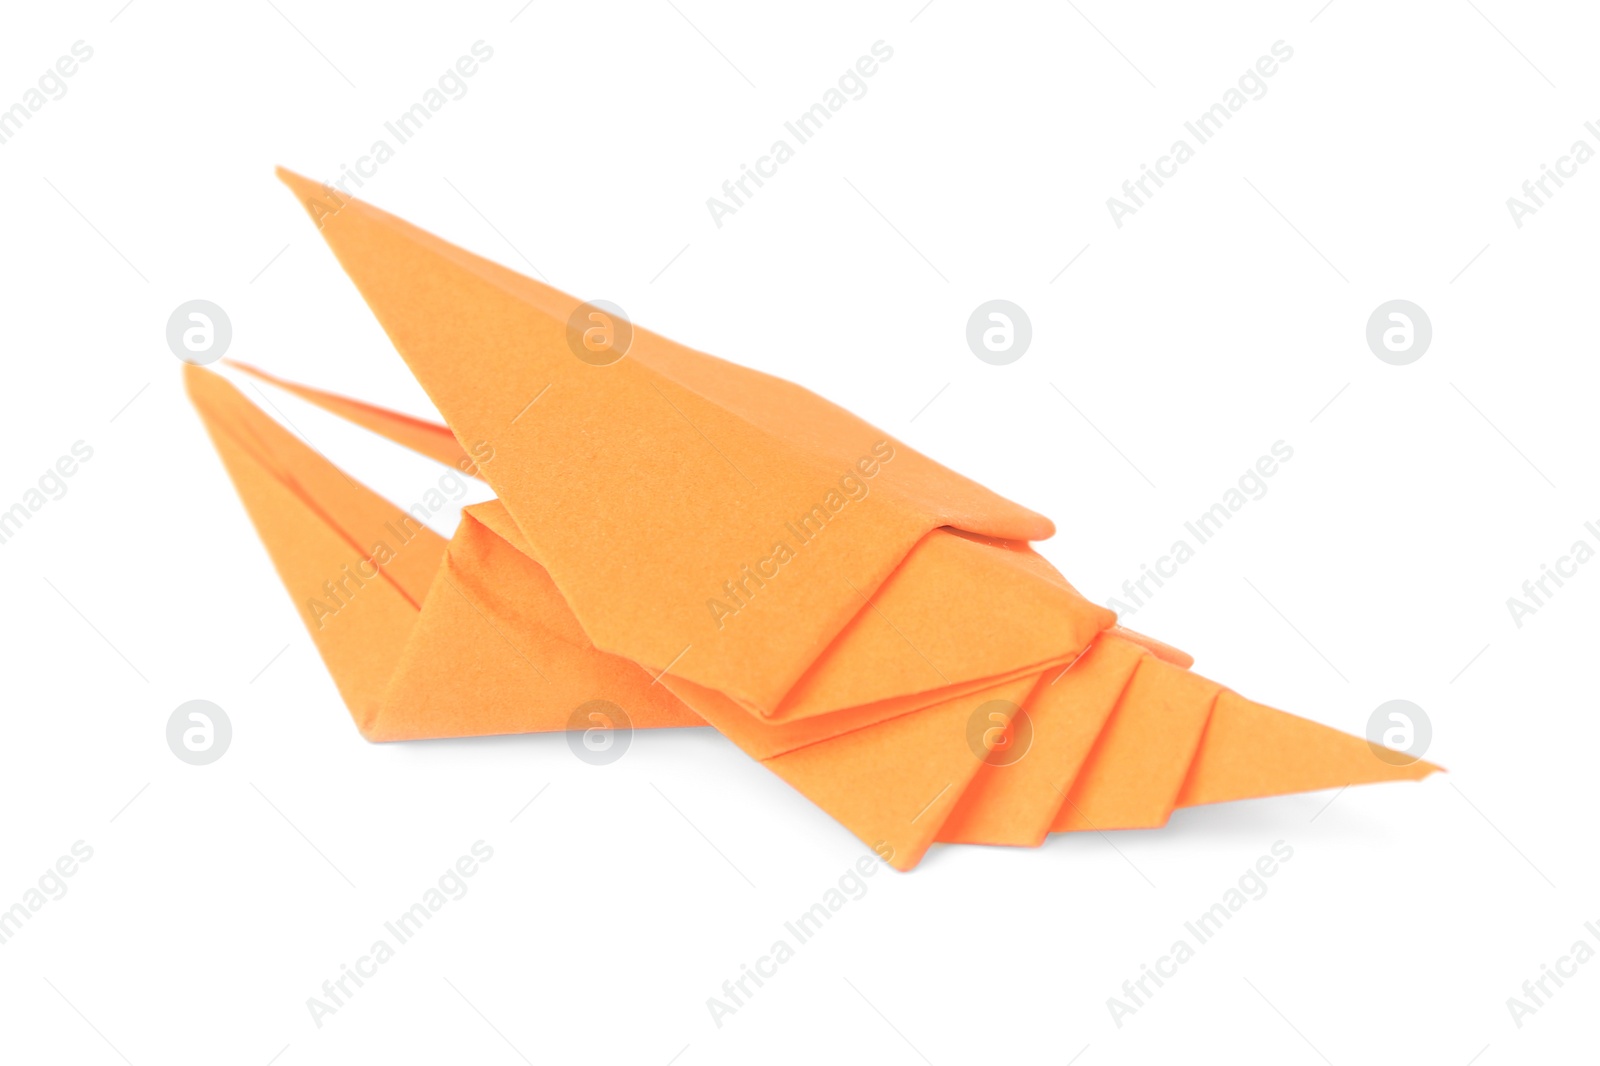 Photo of Origami art. Handmade orange paper crayfish on white background